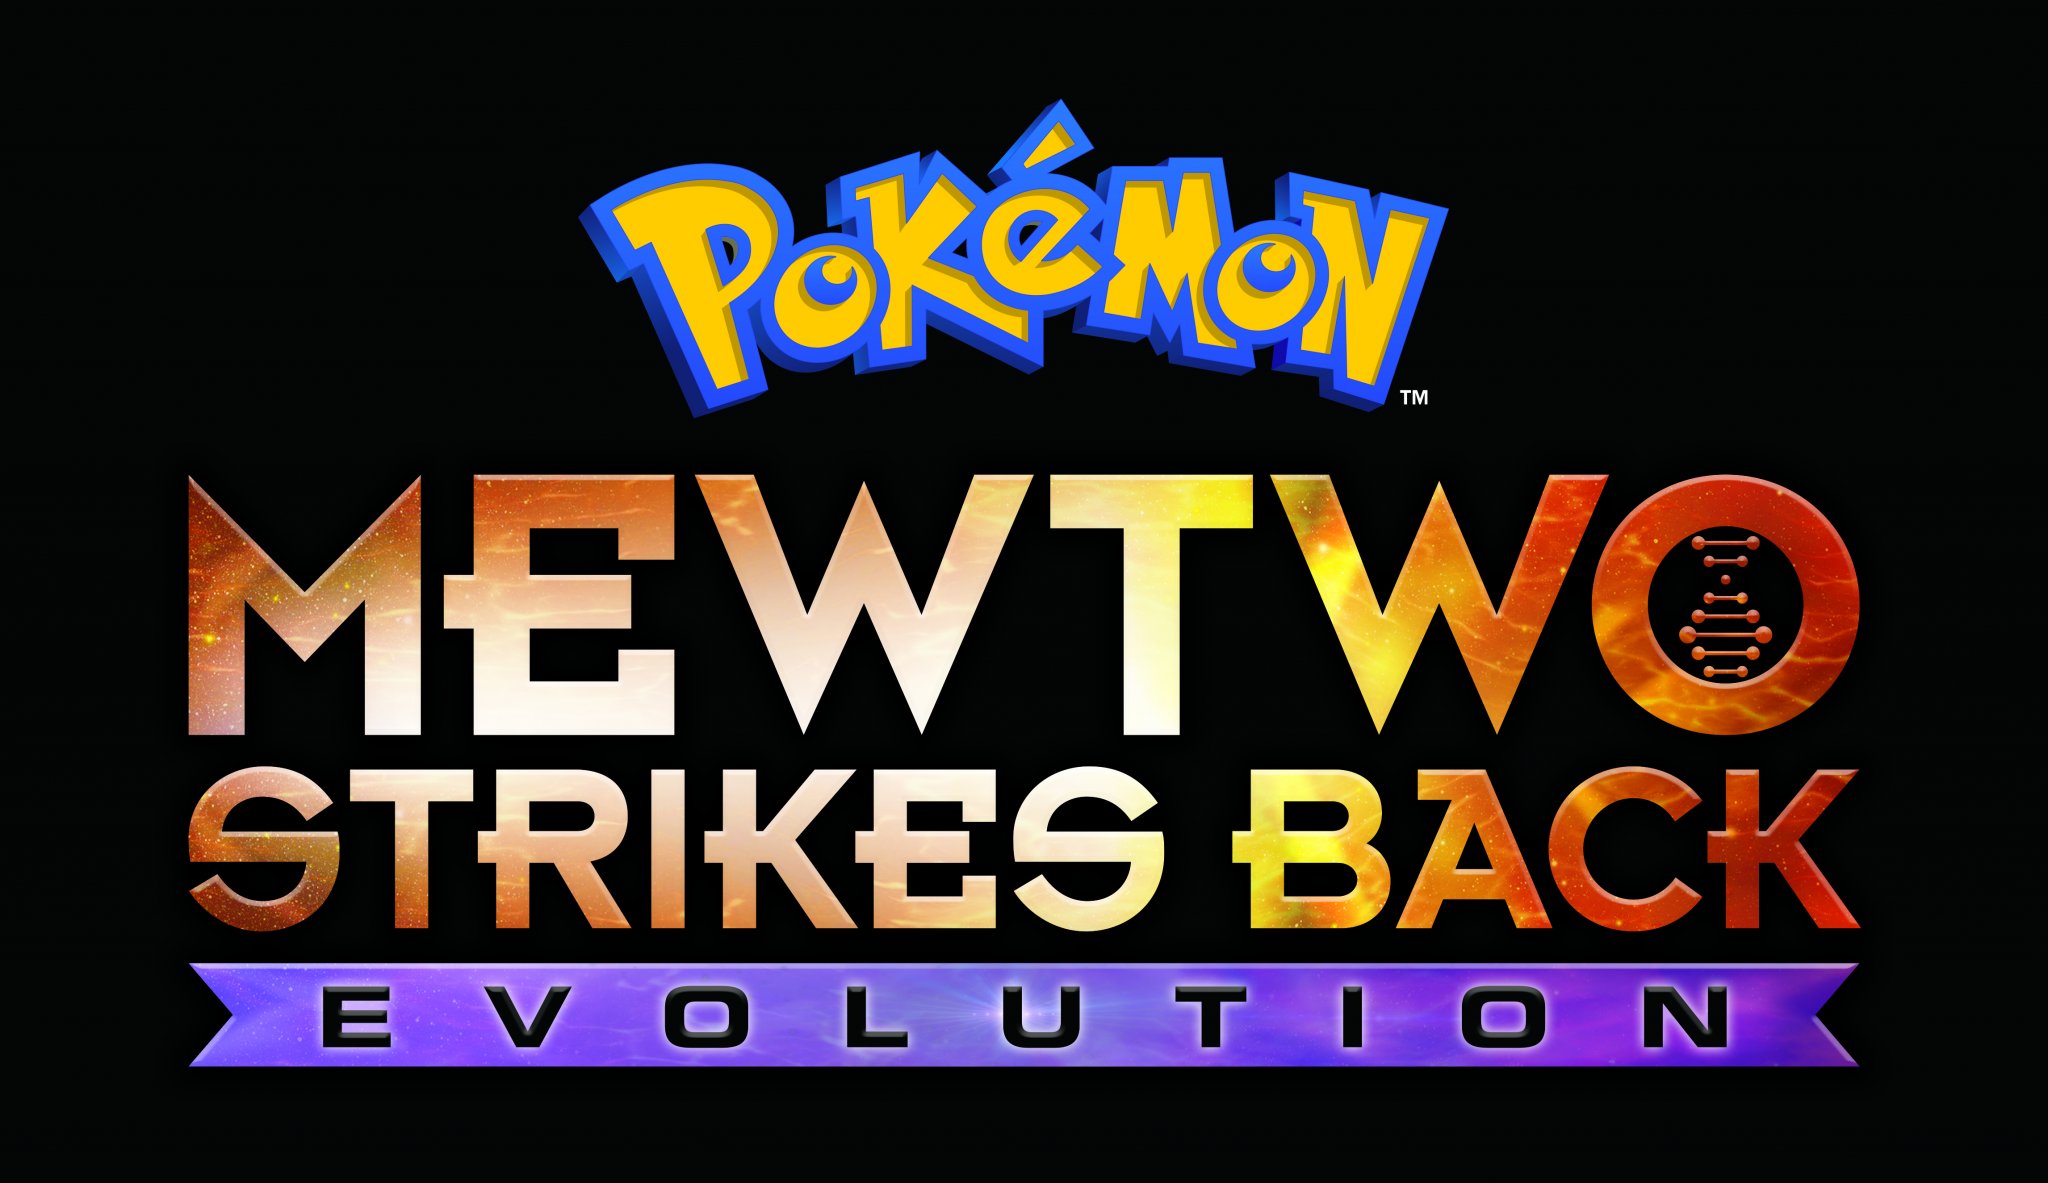 Watch Pokémon: Mewtwo Strikes Back—Evolution on Netflix